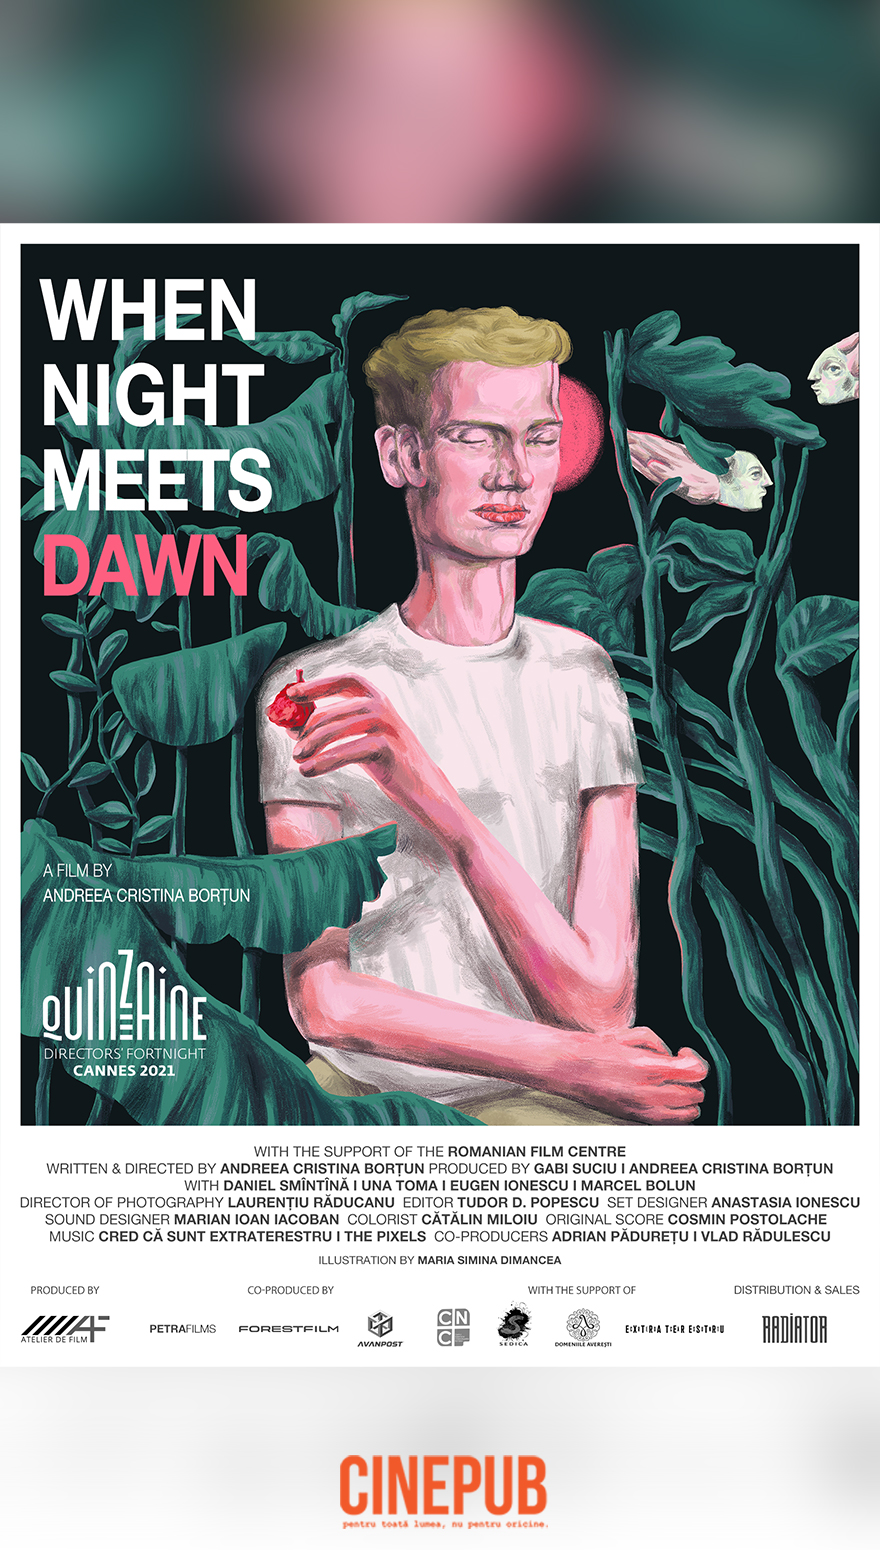 When night meets dawn - by Andreea Bortun - short film online on CINEPUB